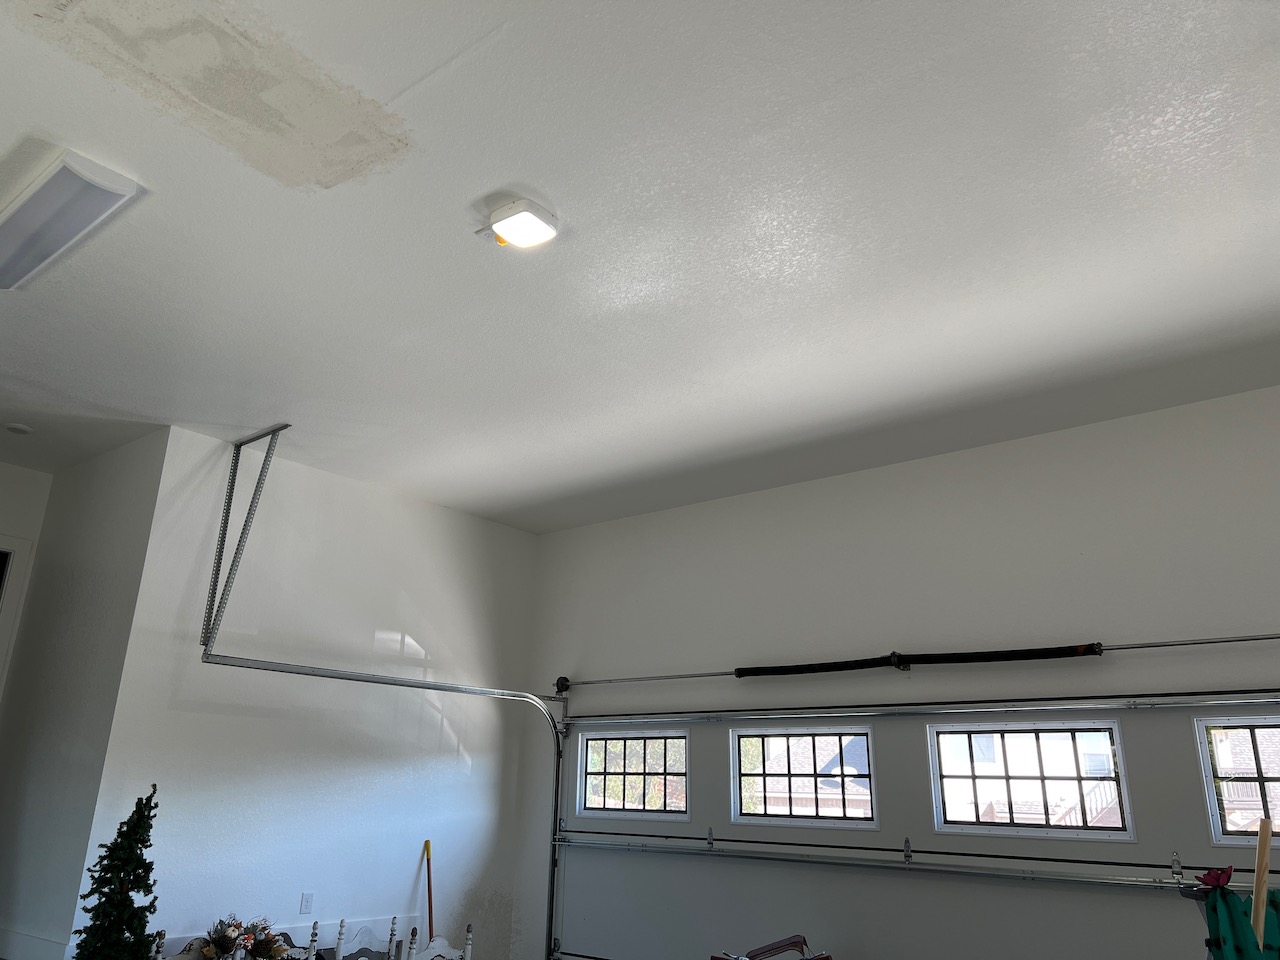 LED light mounted on ceiling.